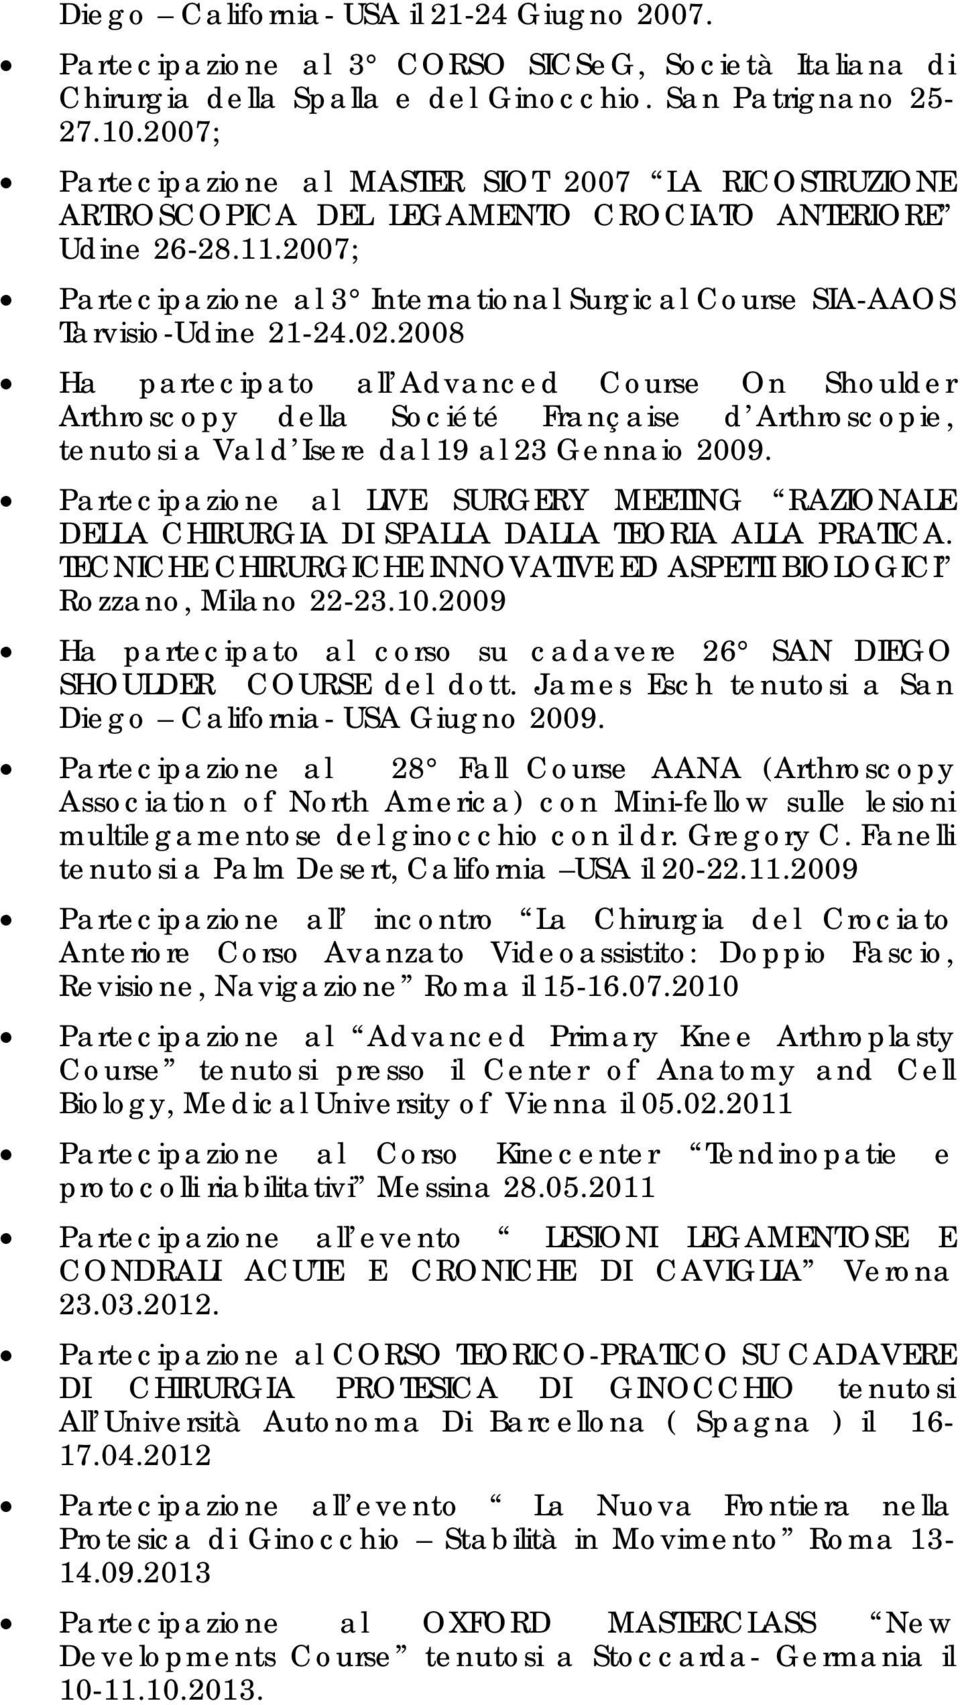 2007; Partecipazione al 3 International Surgical Course SIA-AAOS Tarvisio-Udine 21-24.02.